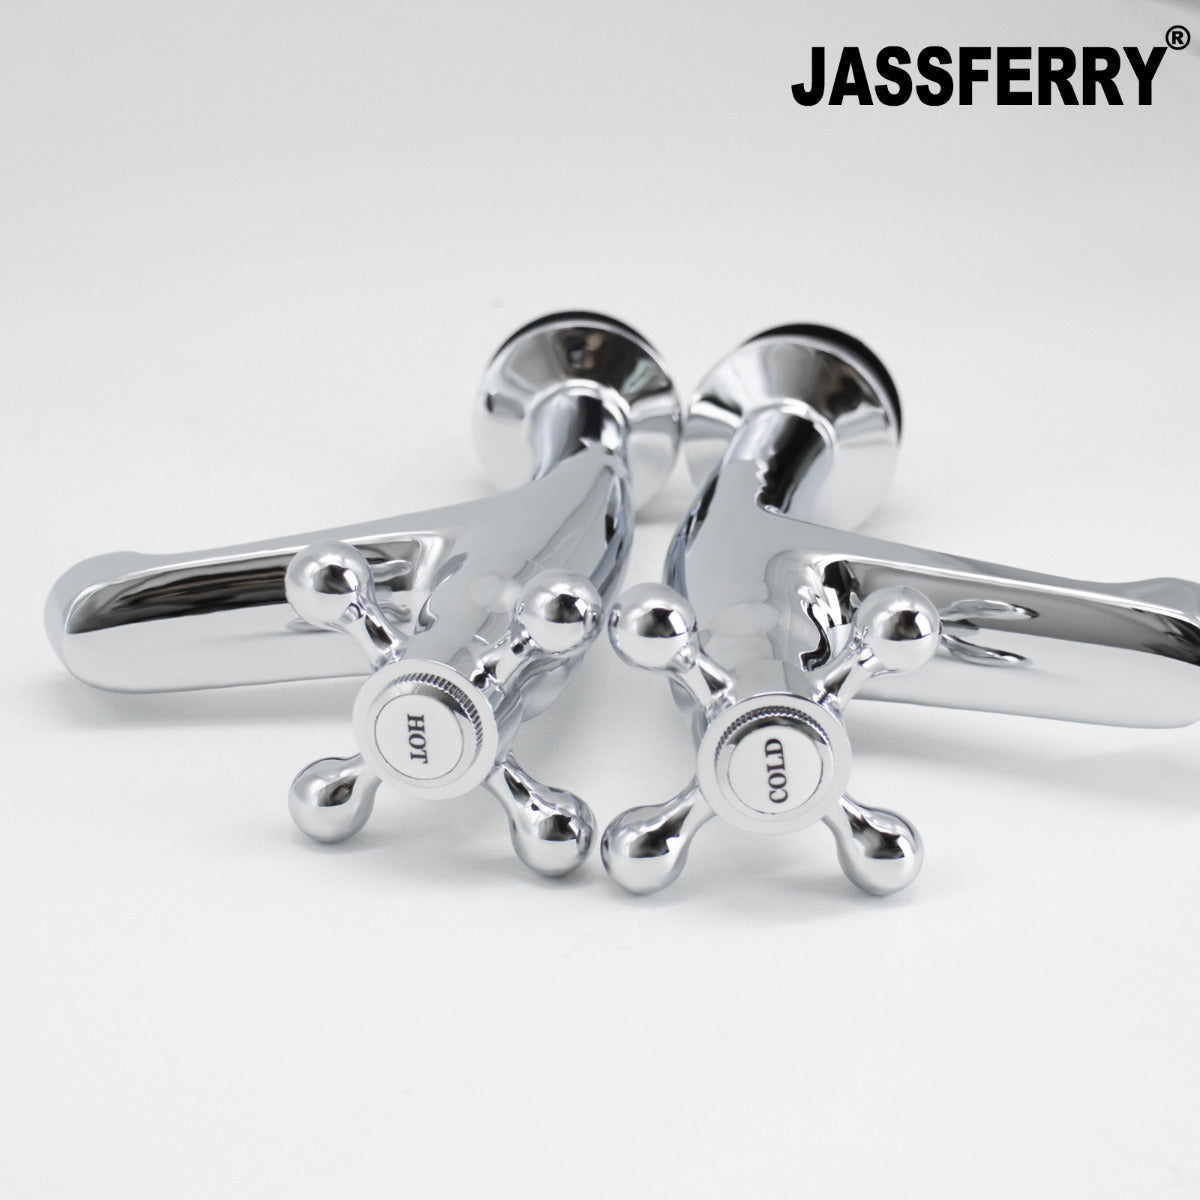 JassferryJASSFERRY Pair of Basin Taps Hot & Cold Water Bath Cross Handle High Neck ChromeBasin Taps